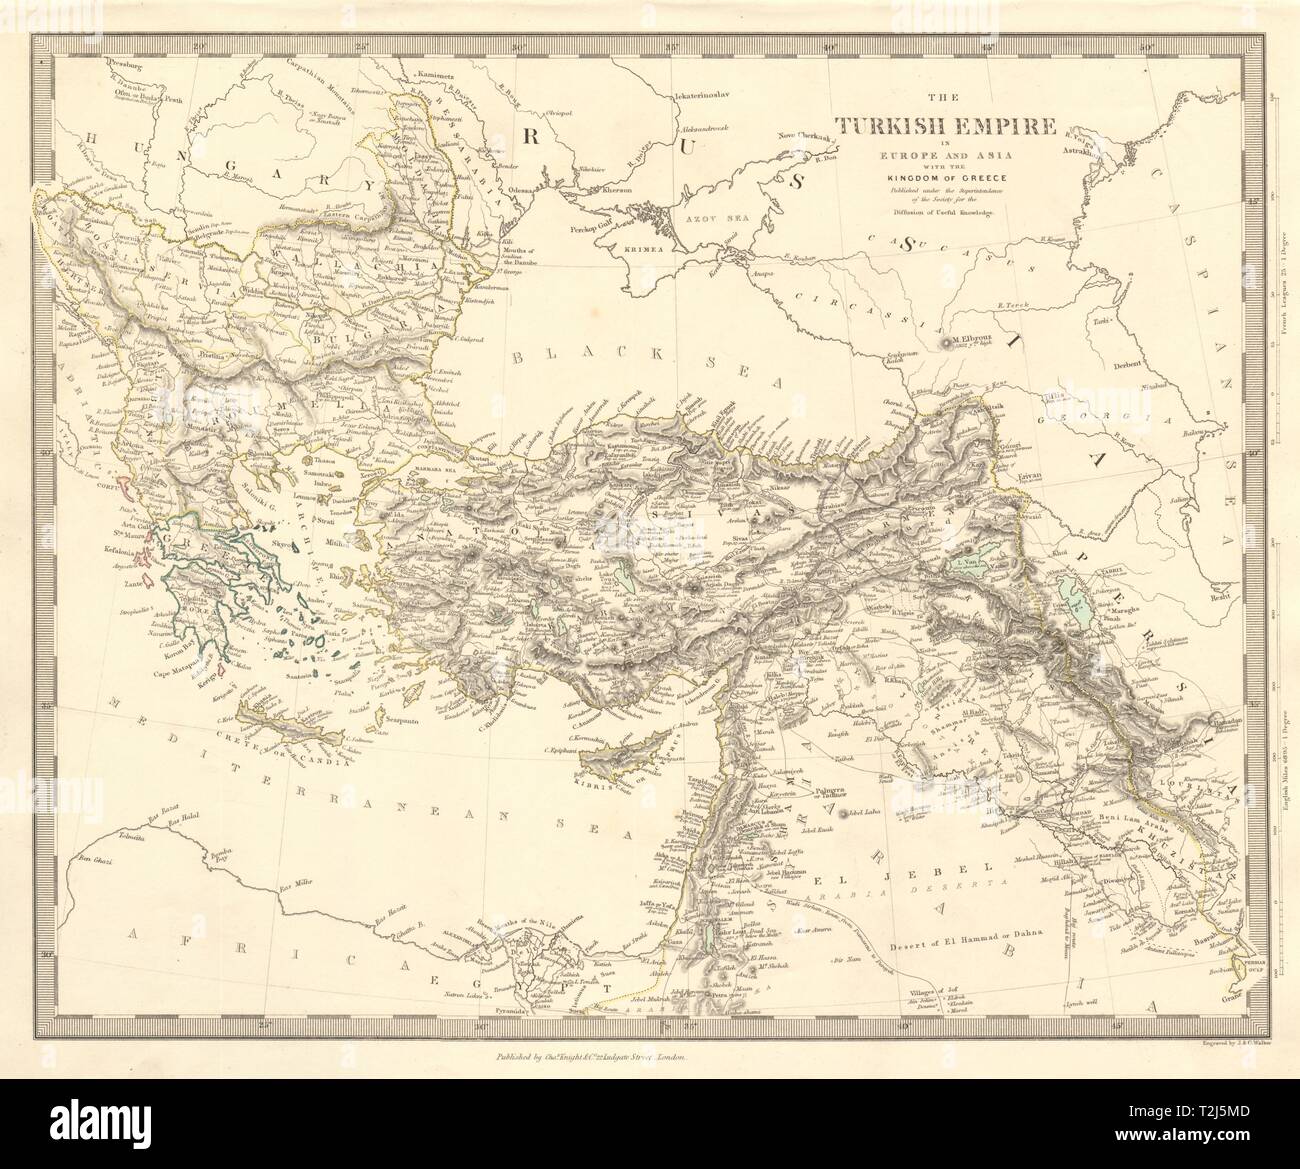 TURKISH / OTTOMAN EMPIRE in Europe & Asia. Kingdom of Greece. SDUK 1845 map Stock Photo